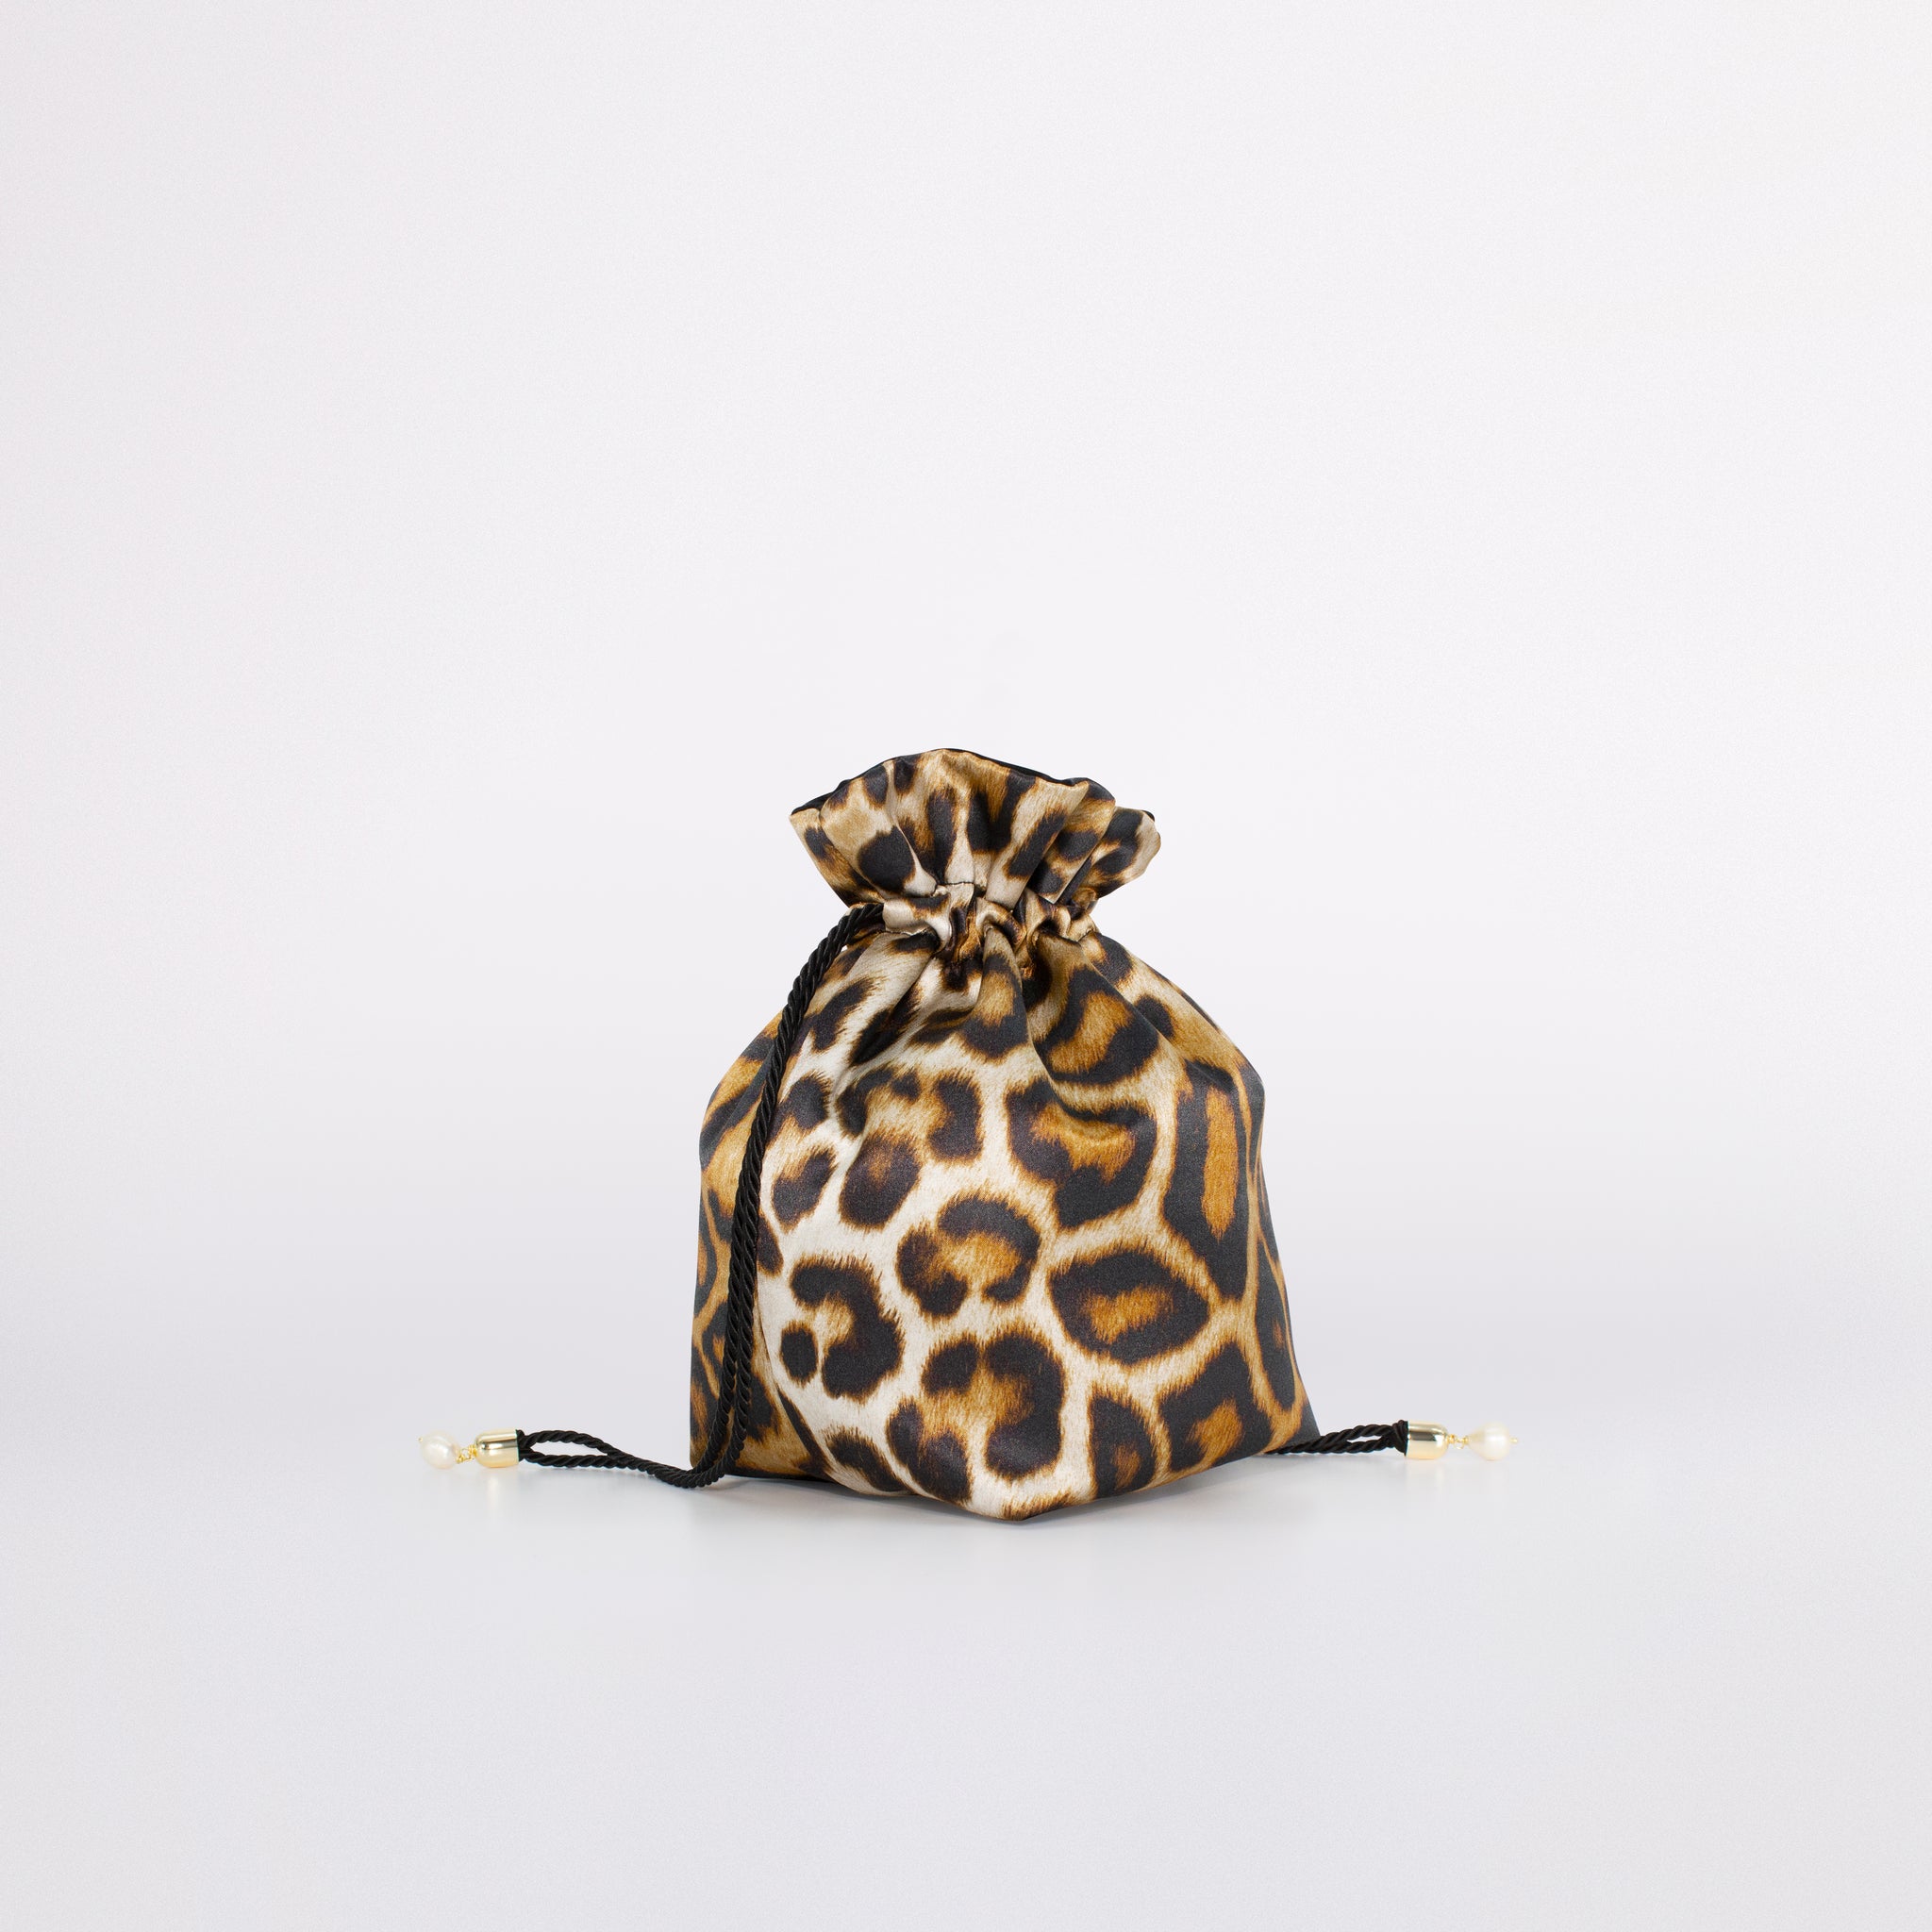 La Leopard Silk in versione bucket